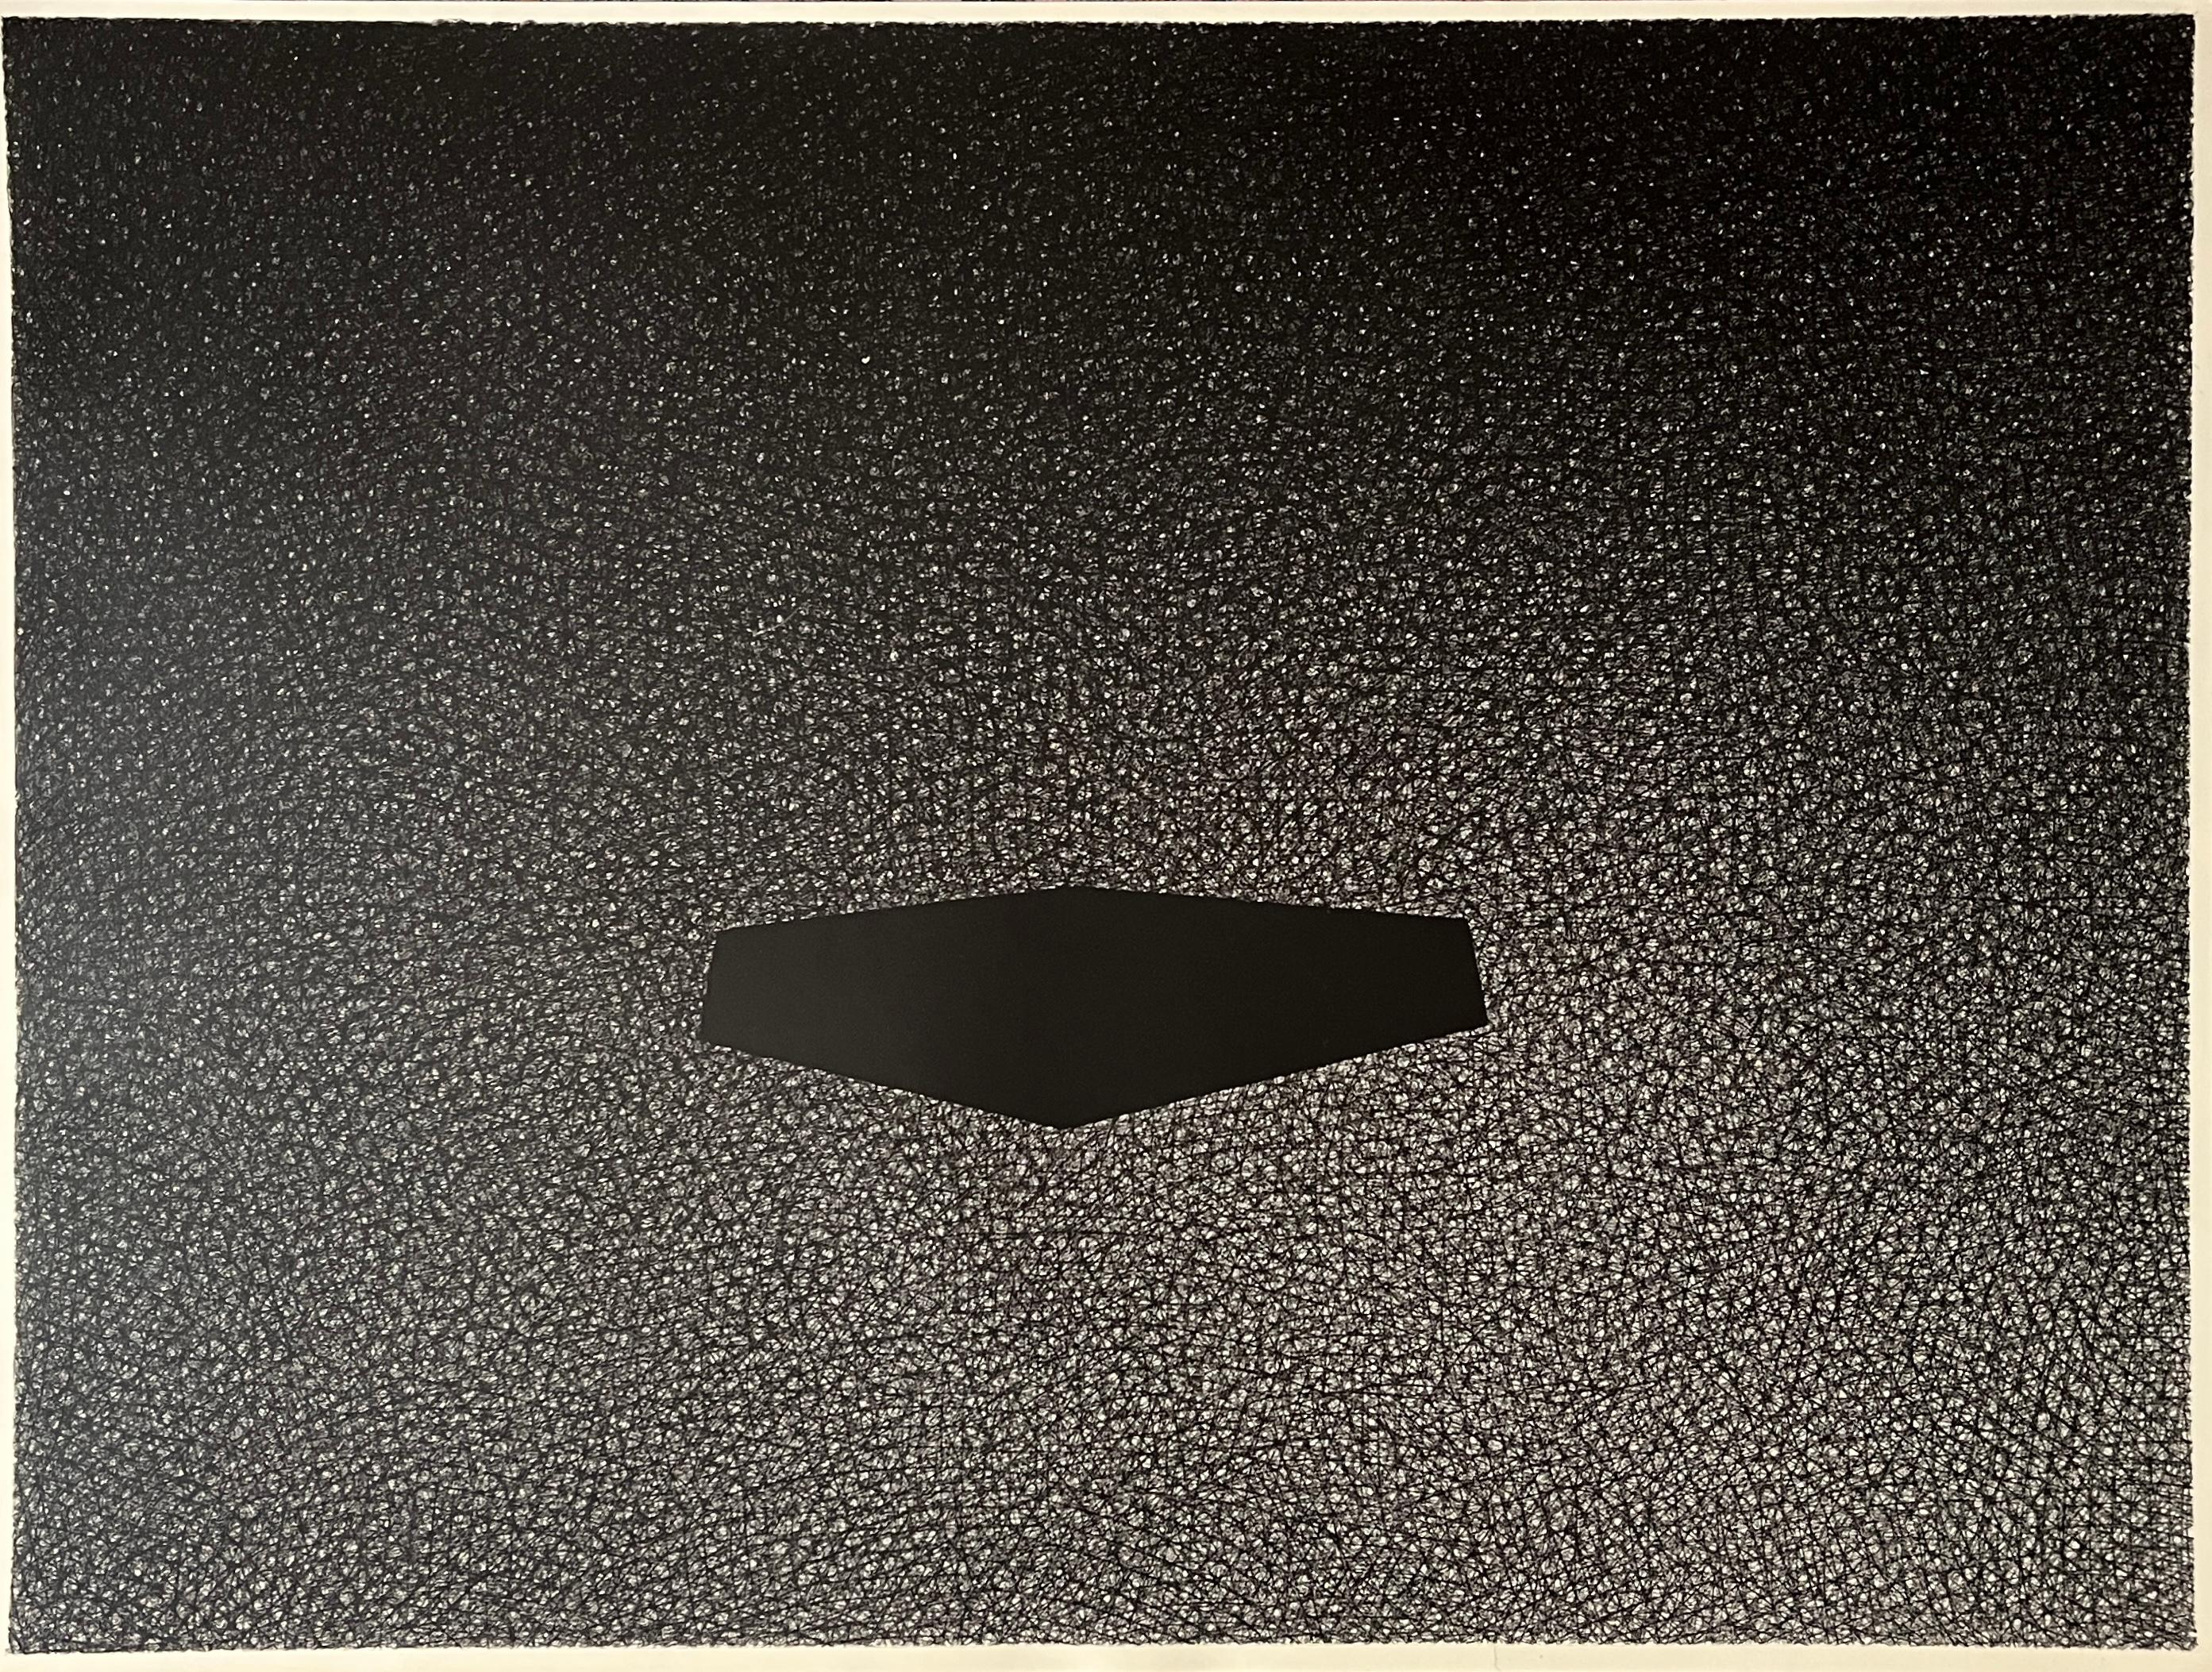 Jack Scott Abstract Drawing - 1980 "#8" Minimalist Cross-Hatch Abstract Charcoal Drawing Modern Art